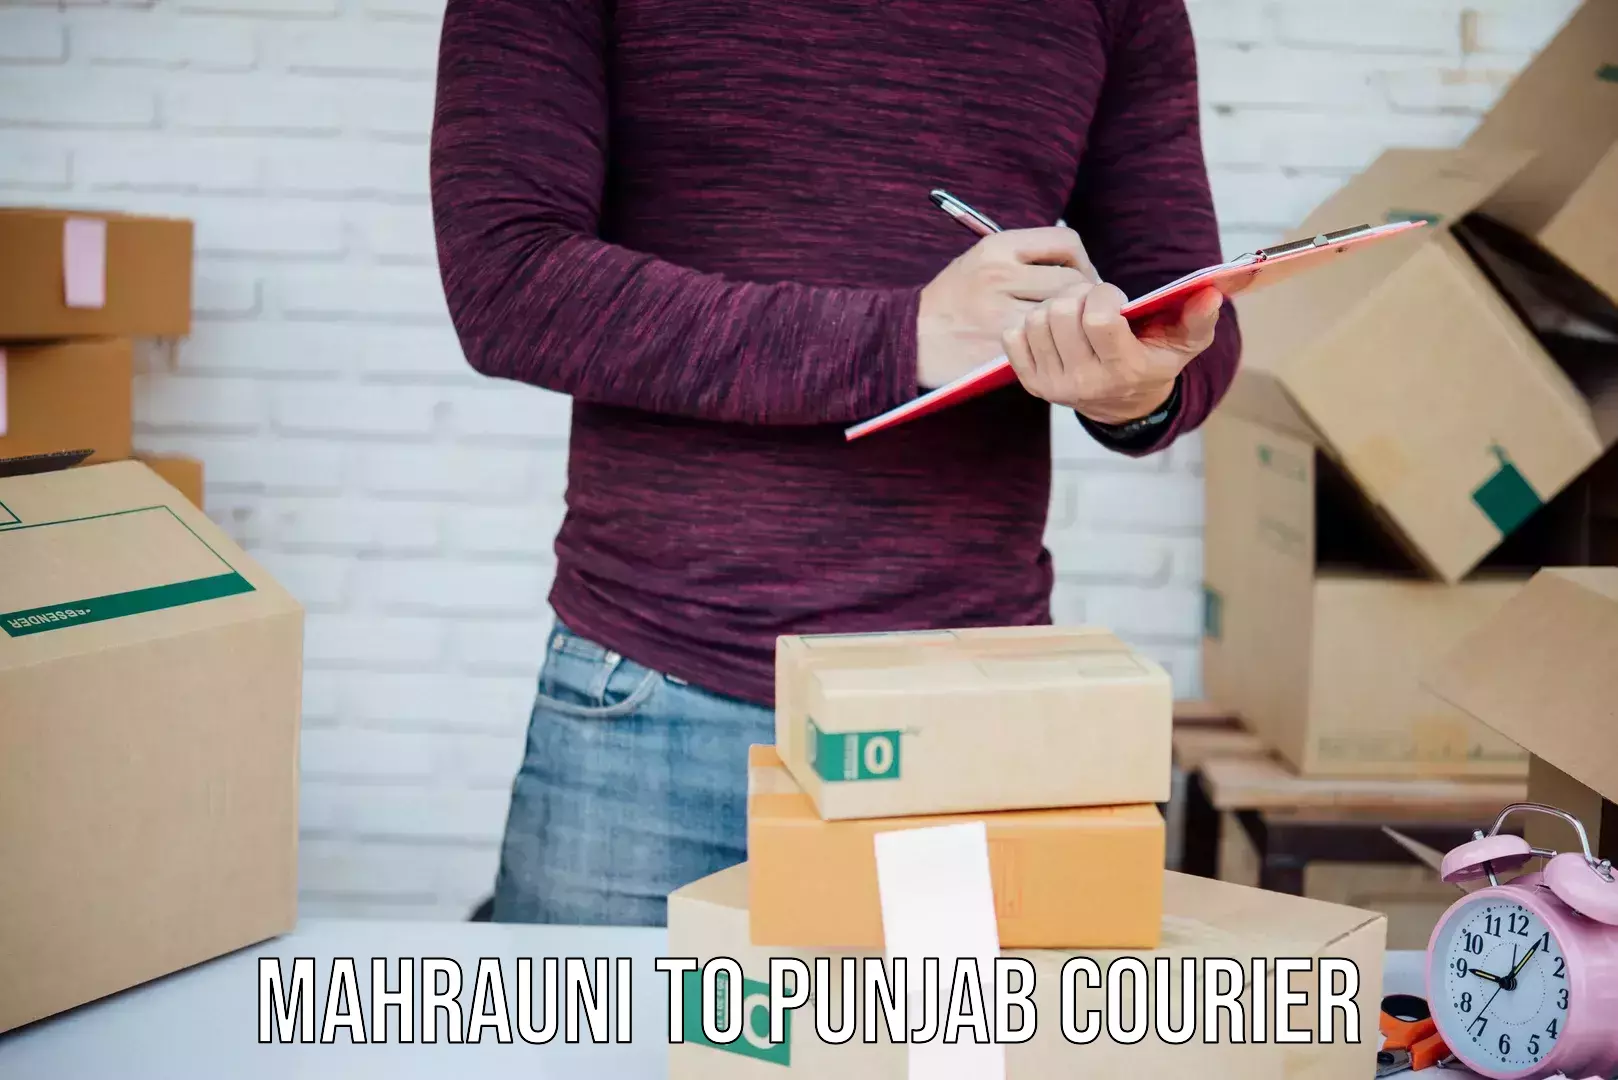 Urgent courier needs Mahrauni to Punjab